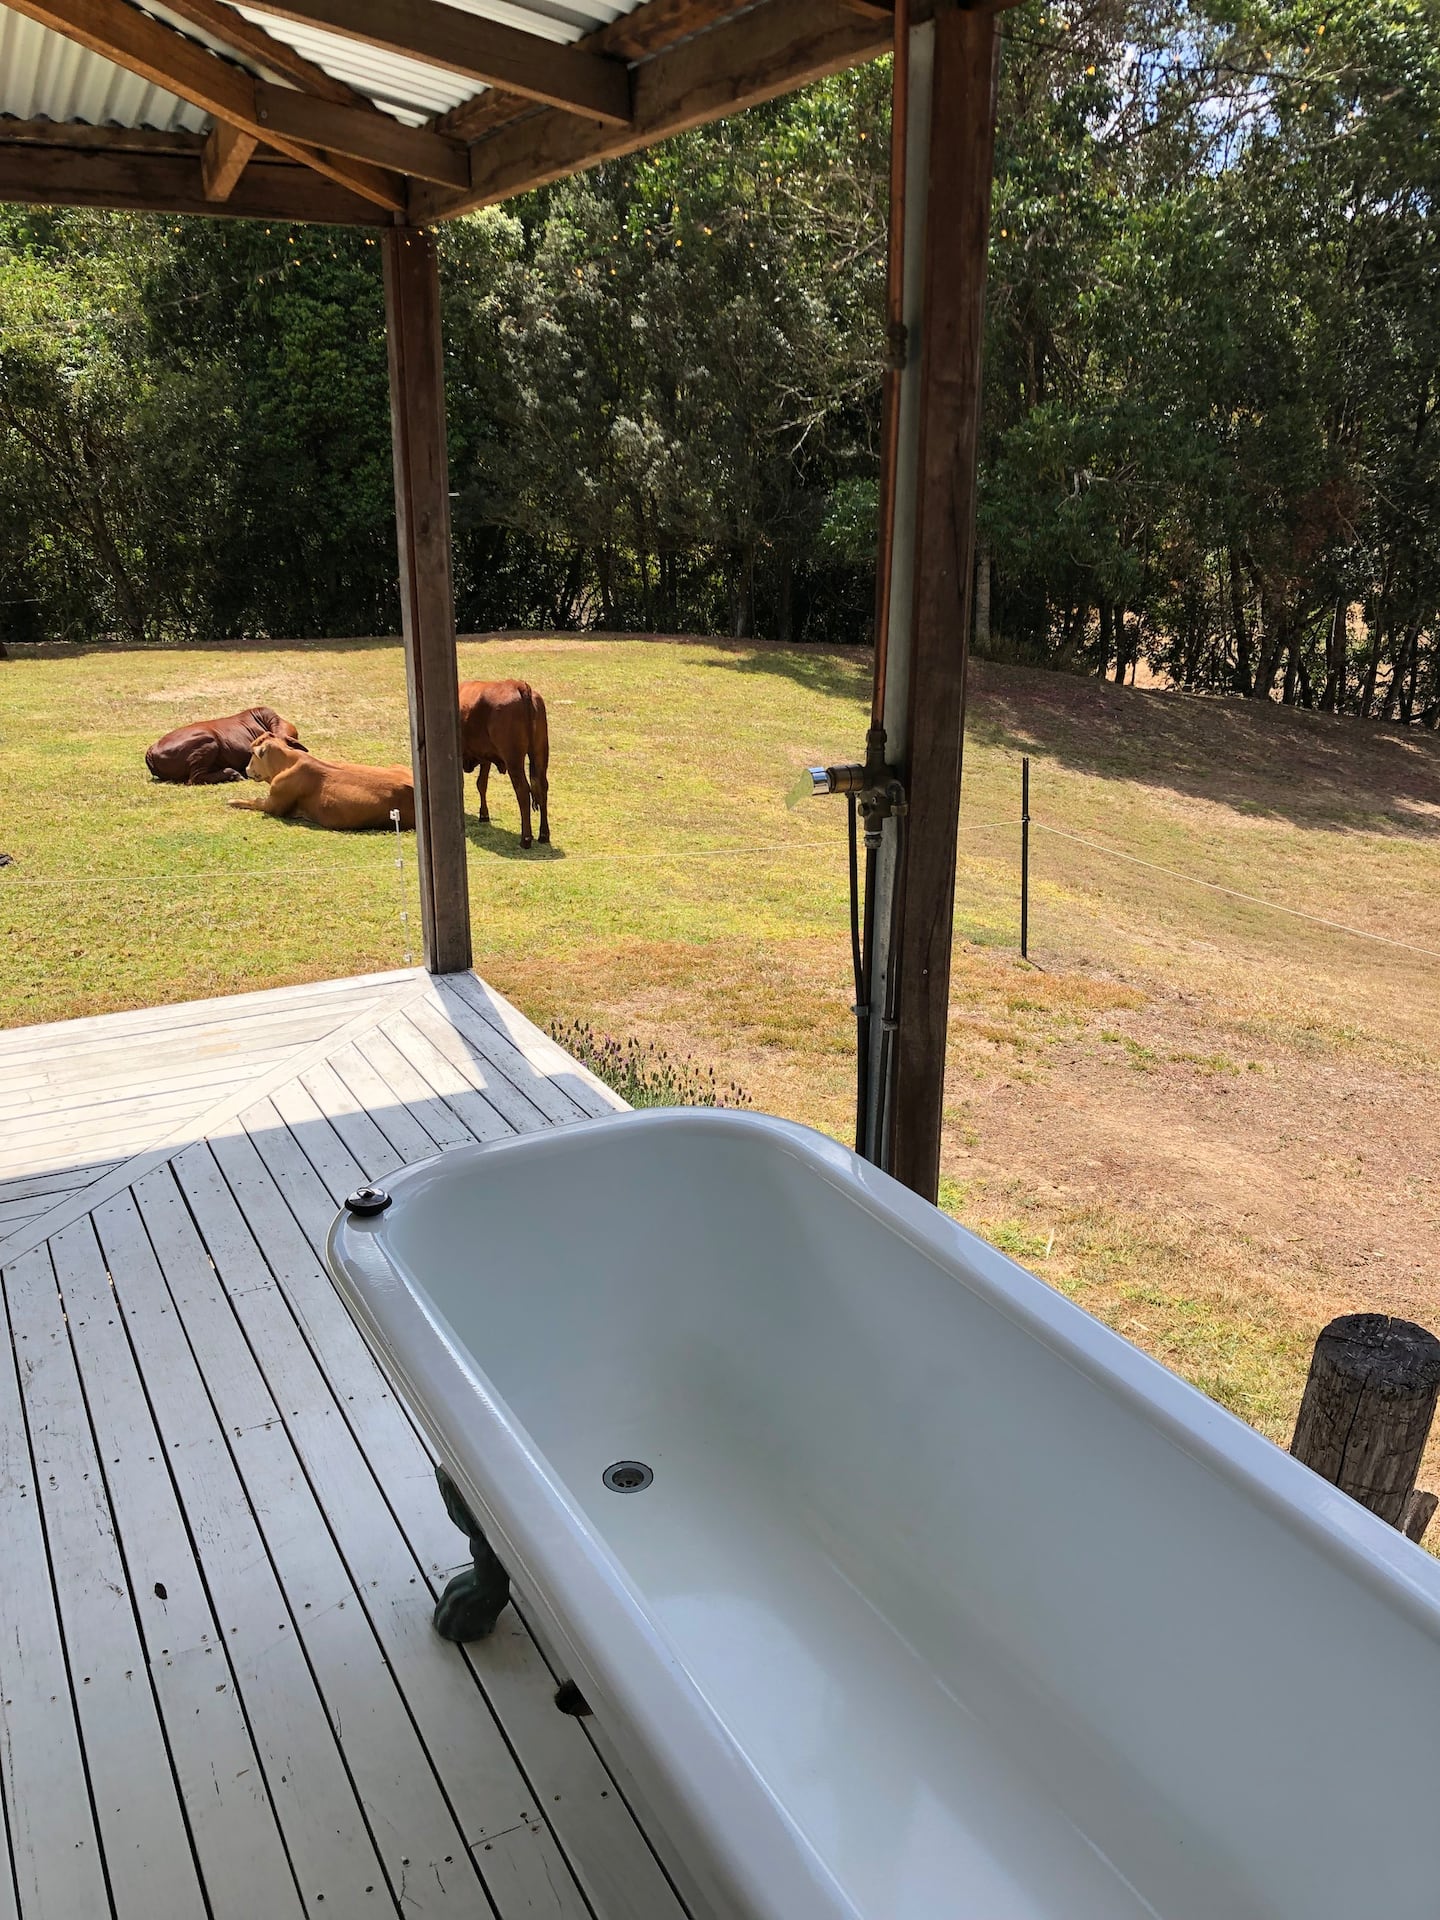 a bath on a verandah with cows visible behind